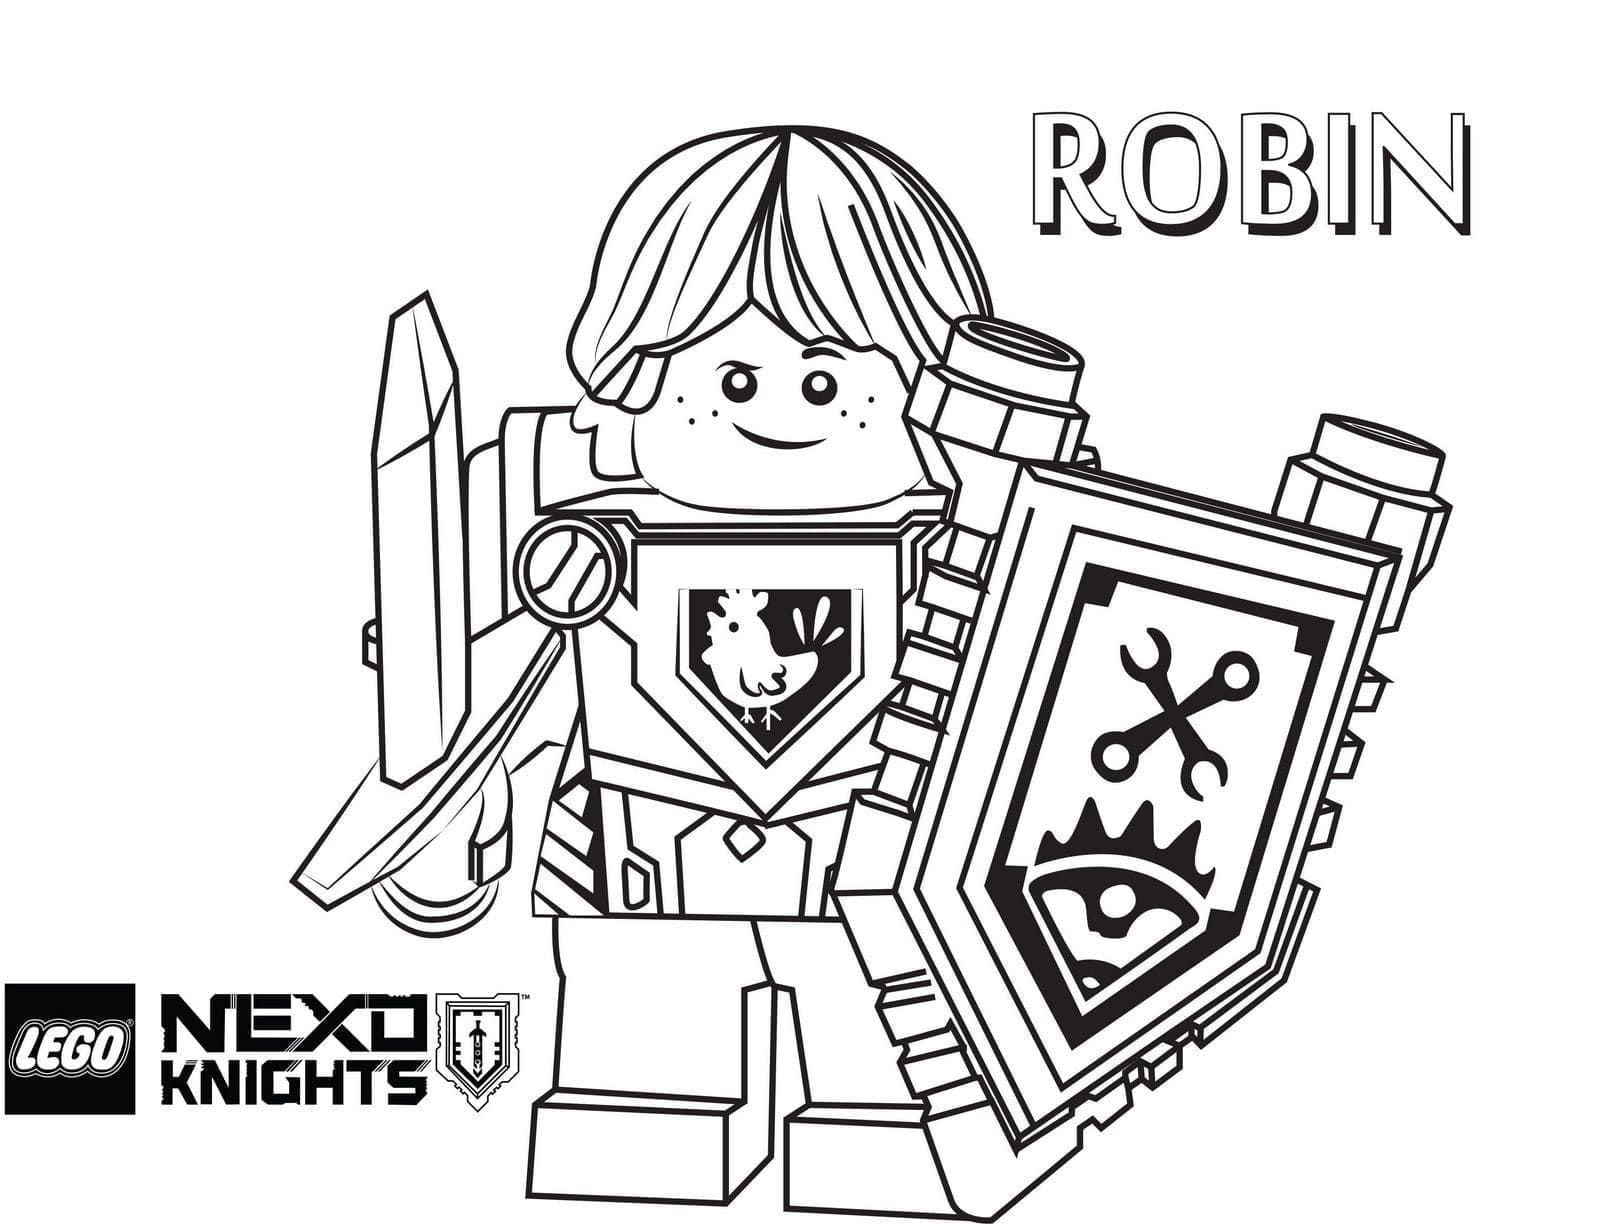 Lego Nexo Knights Robin coloring page